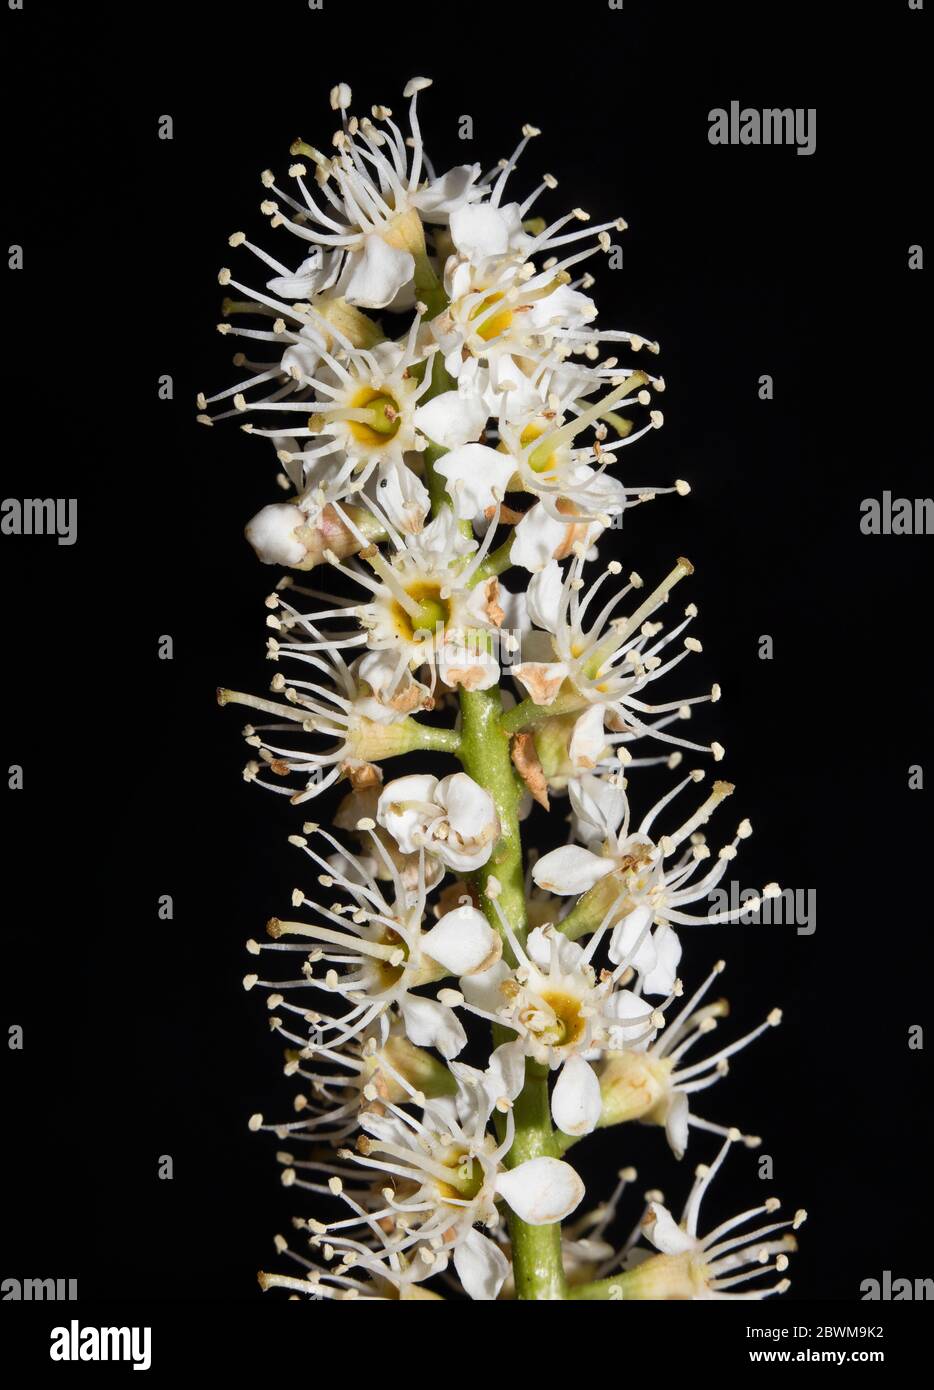 Prunus lusitanica rosaceae family focus stack macro background high quality prints Stock Photo